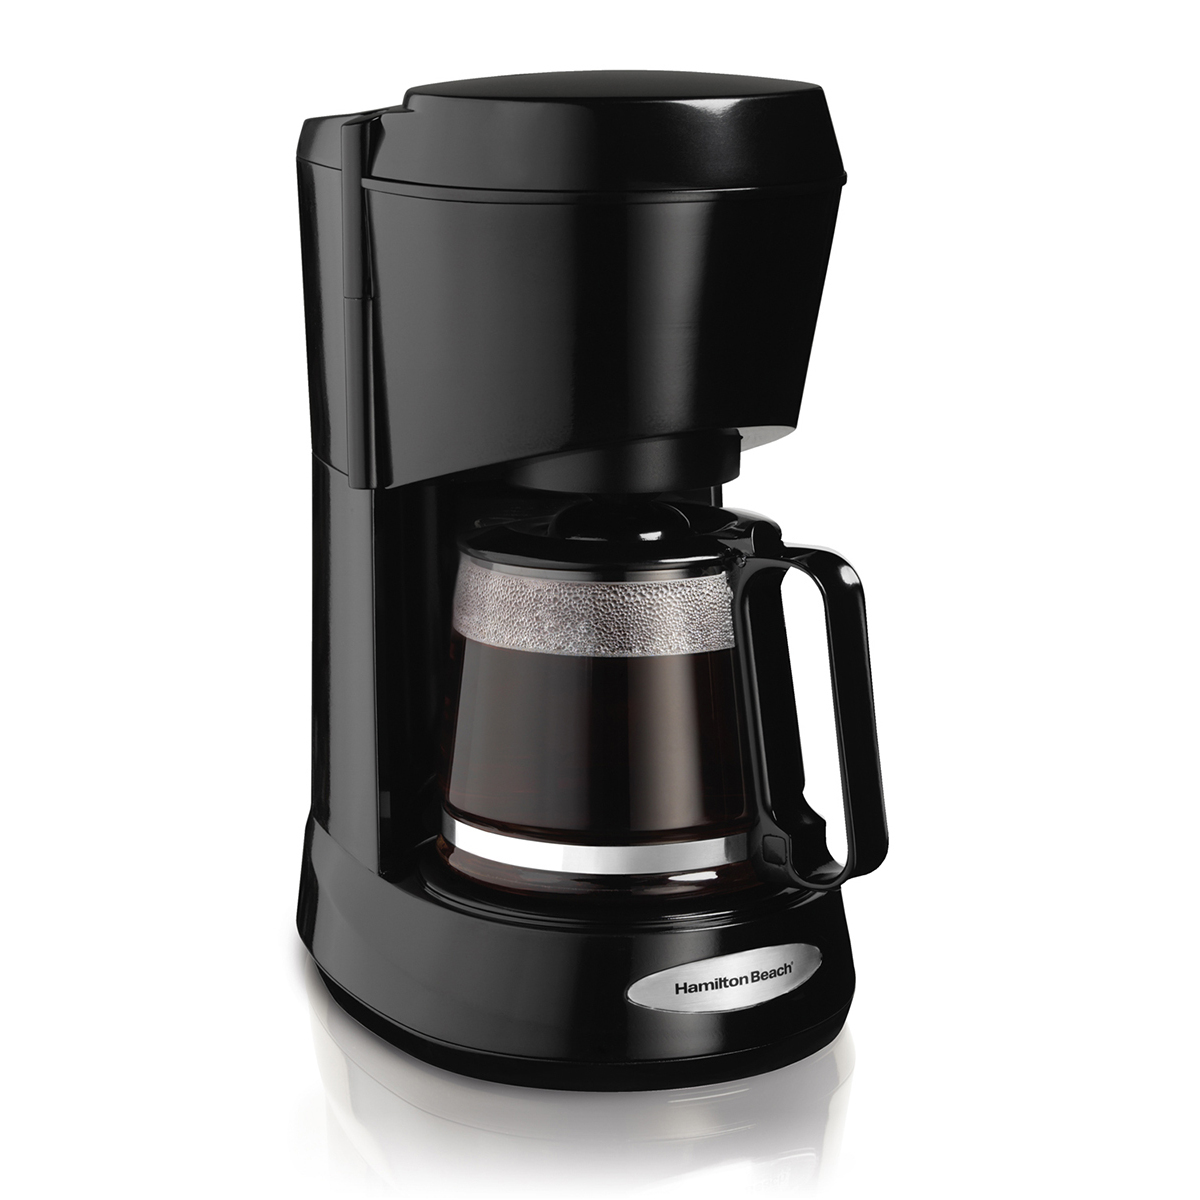 Capresso 5-Cup Mini Drip Coffeemaker 